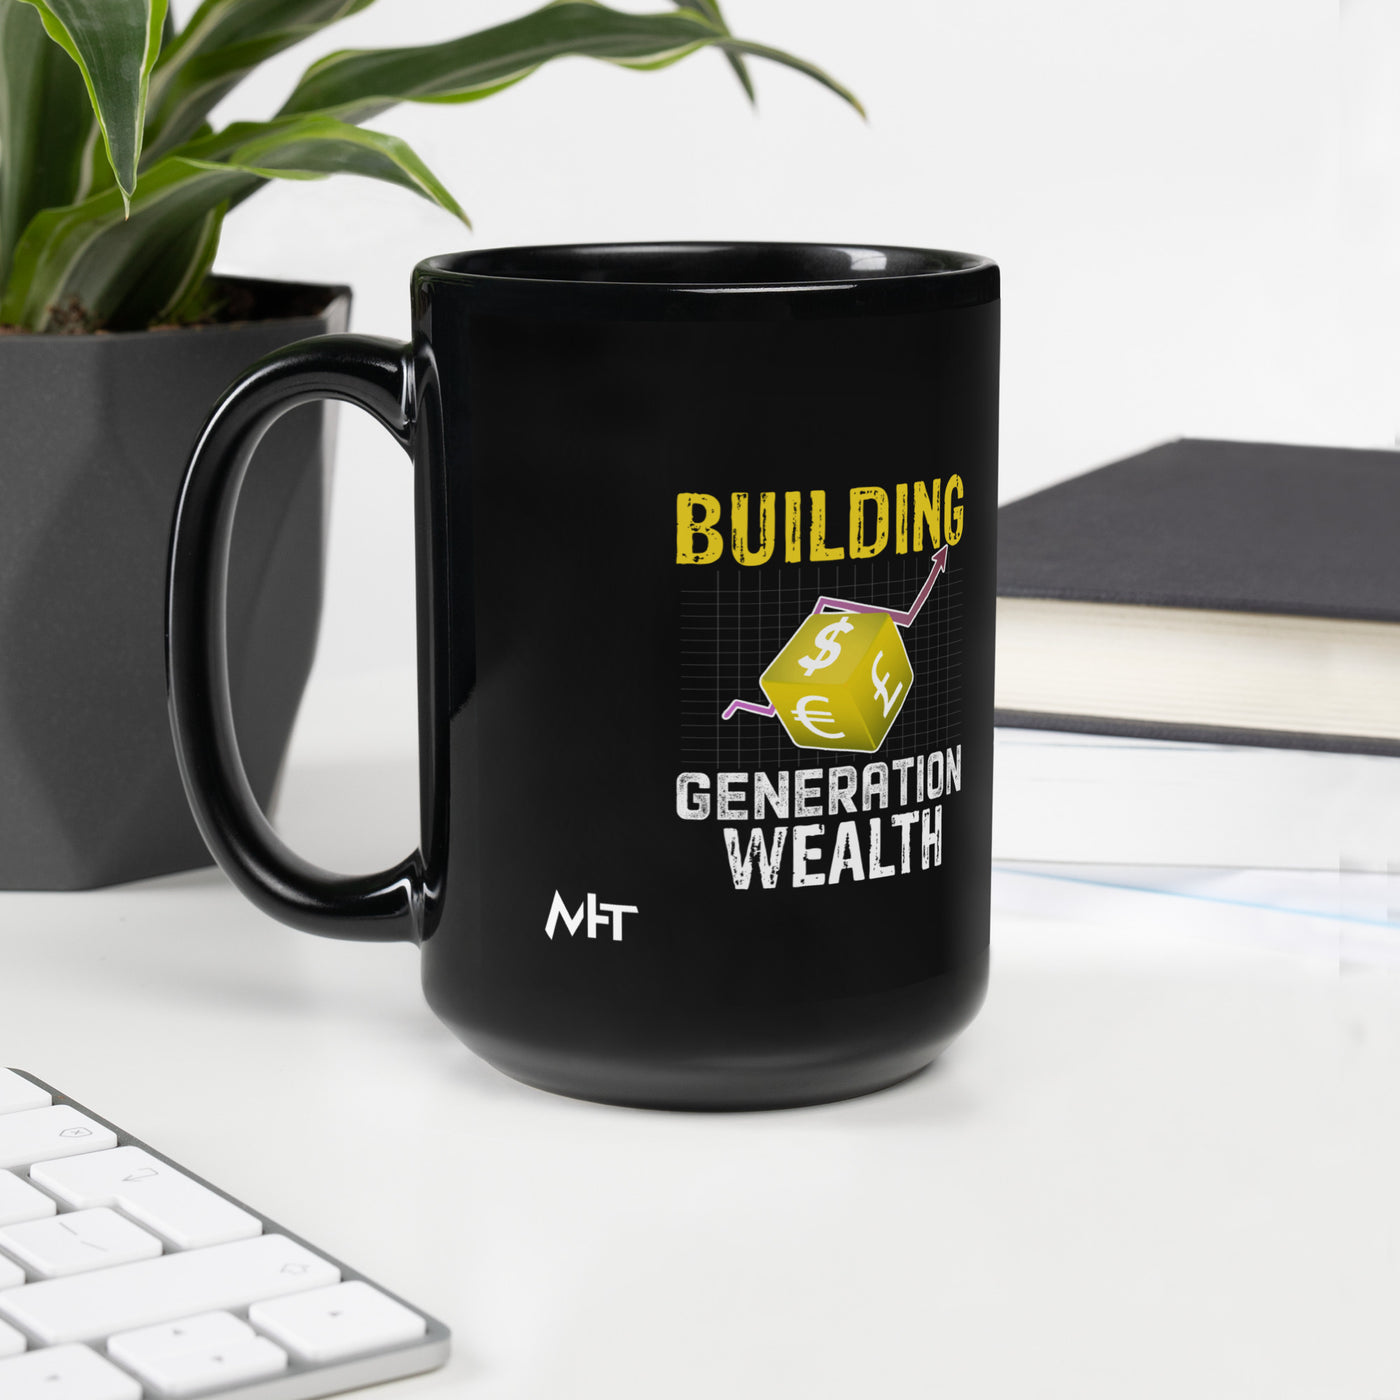 Building Generation Wealth - Black Glossy Mug